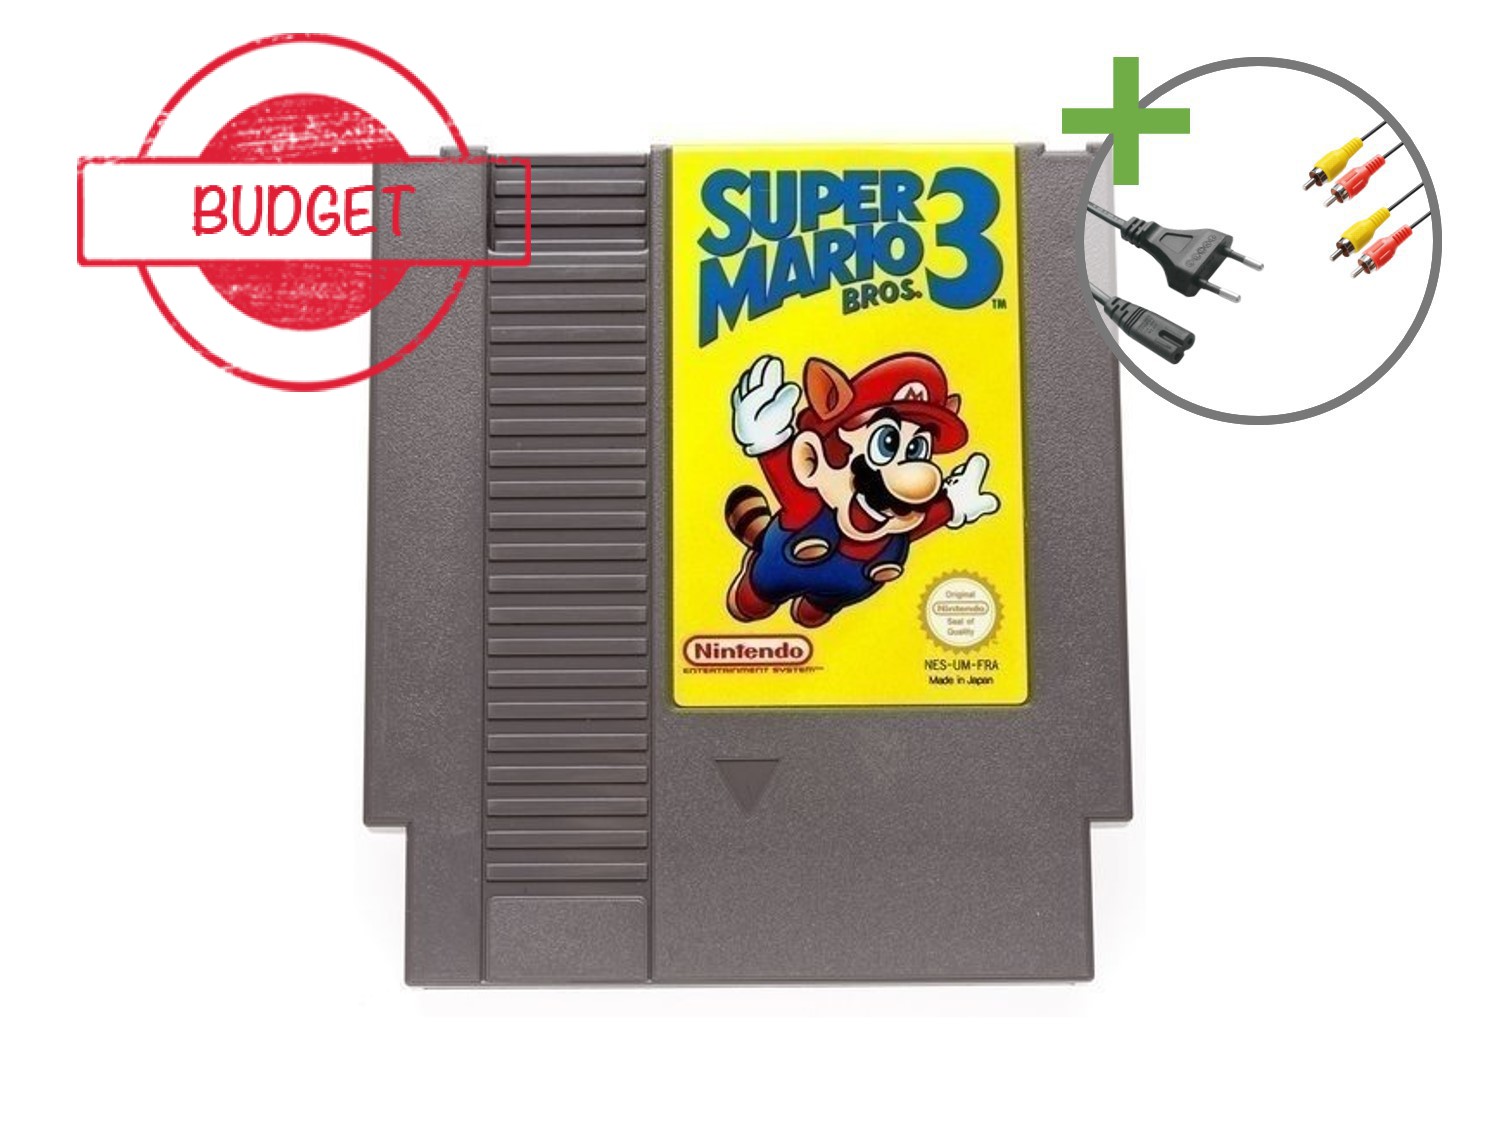 Nintendo NES Starter Pack - Super Mario Bros. 3 Control Deck Edition - Budget - Nintendo NES Hardware - 5